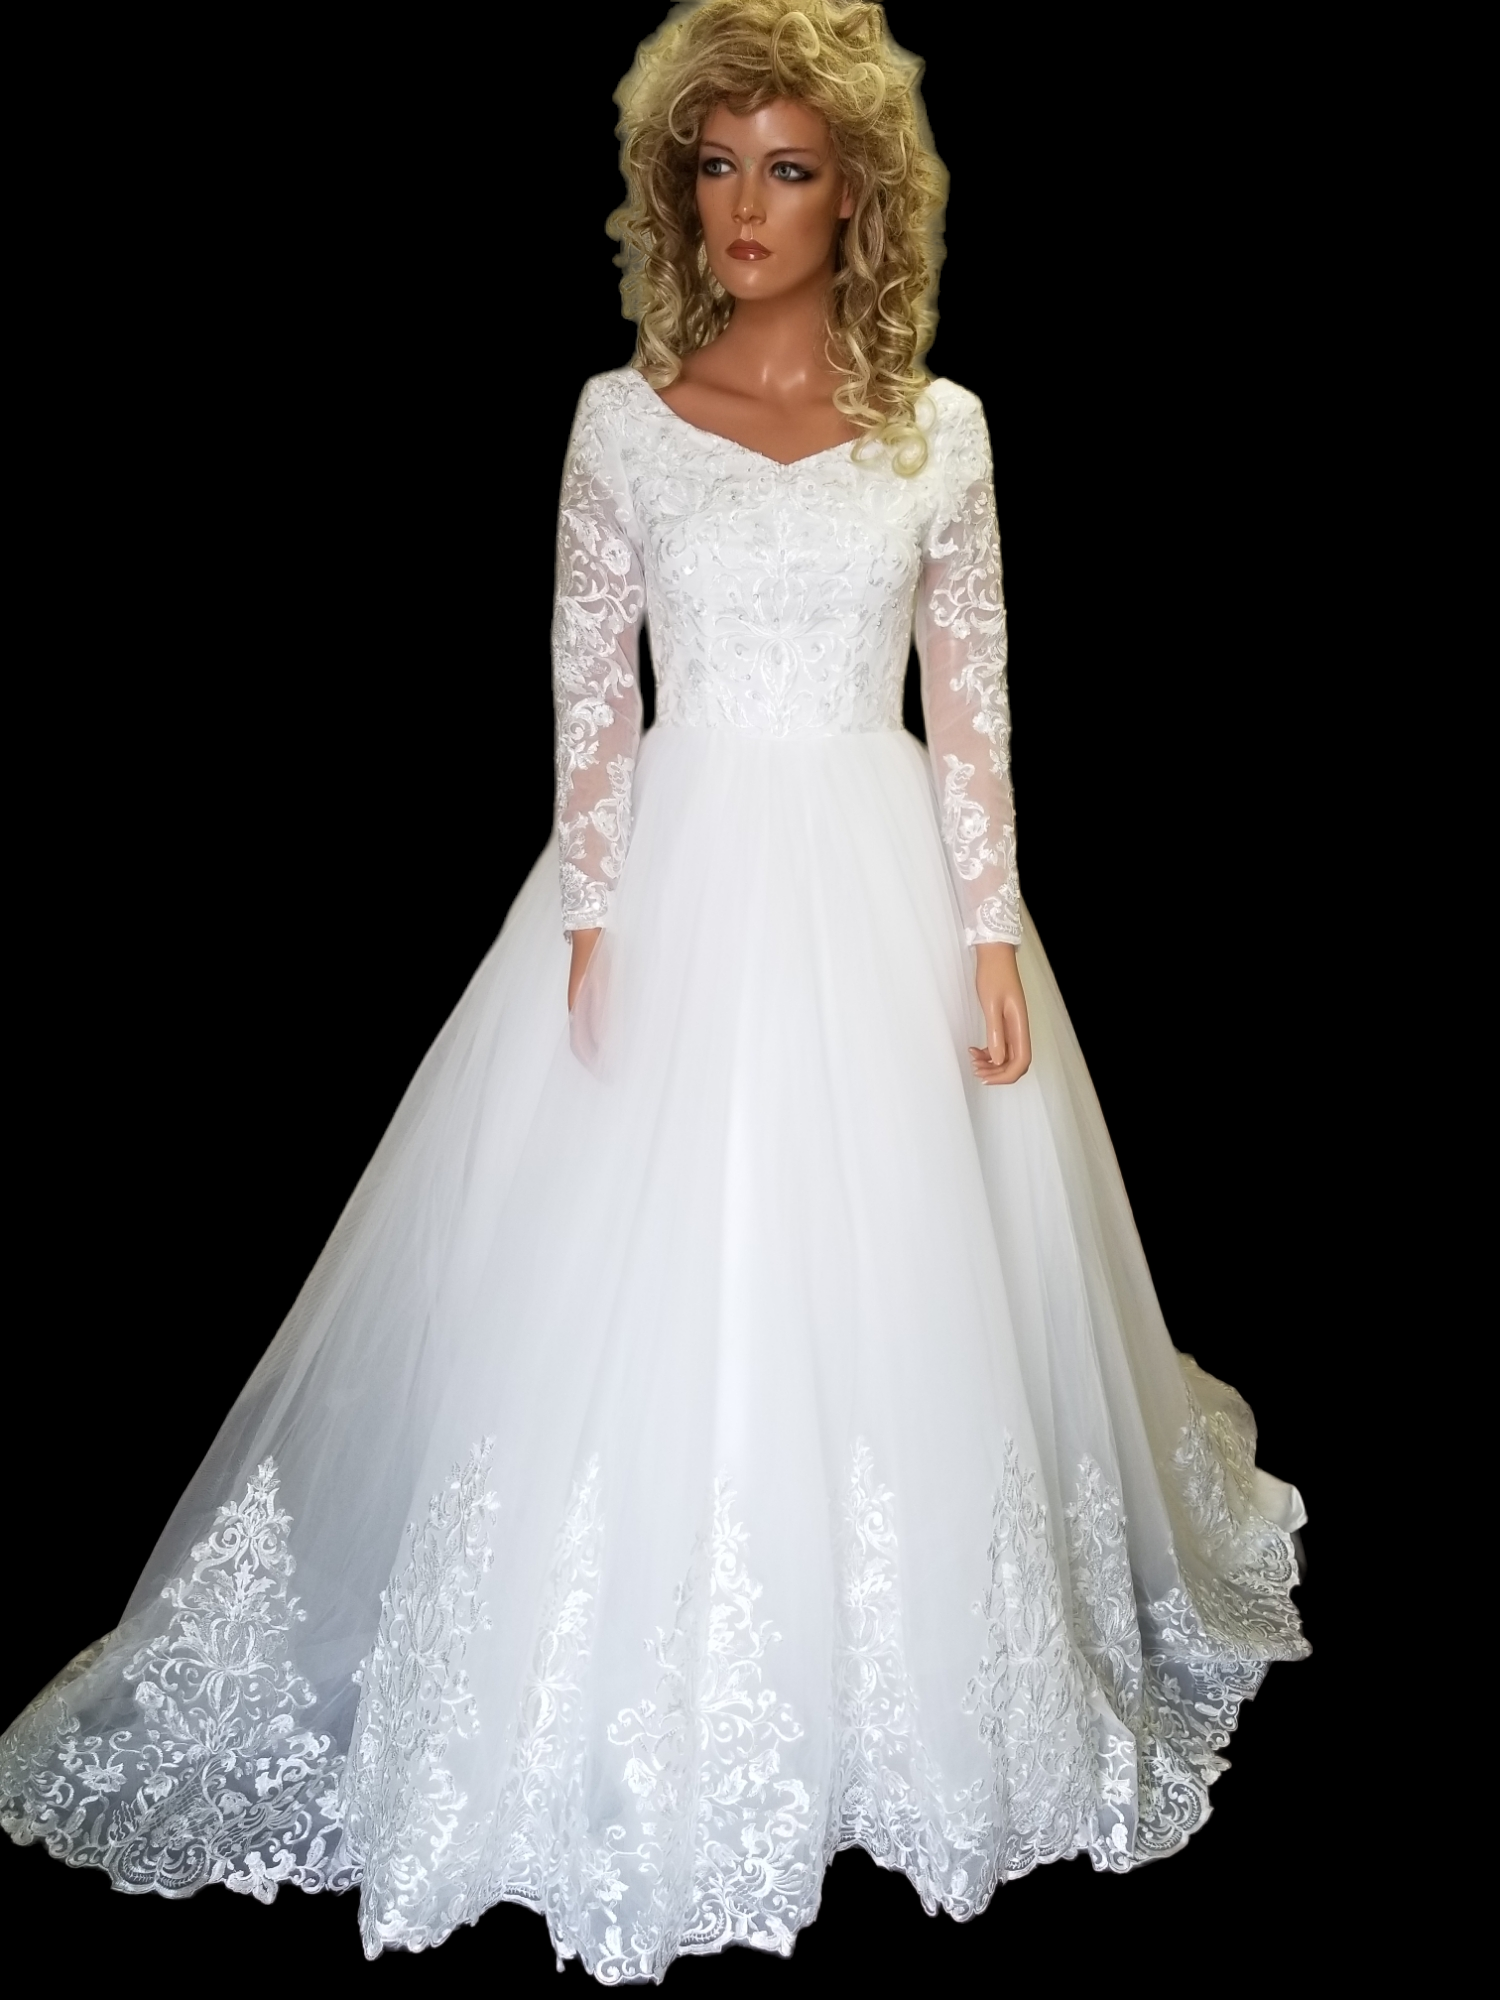 Bridal gowns under $300.